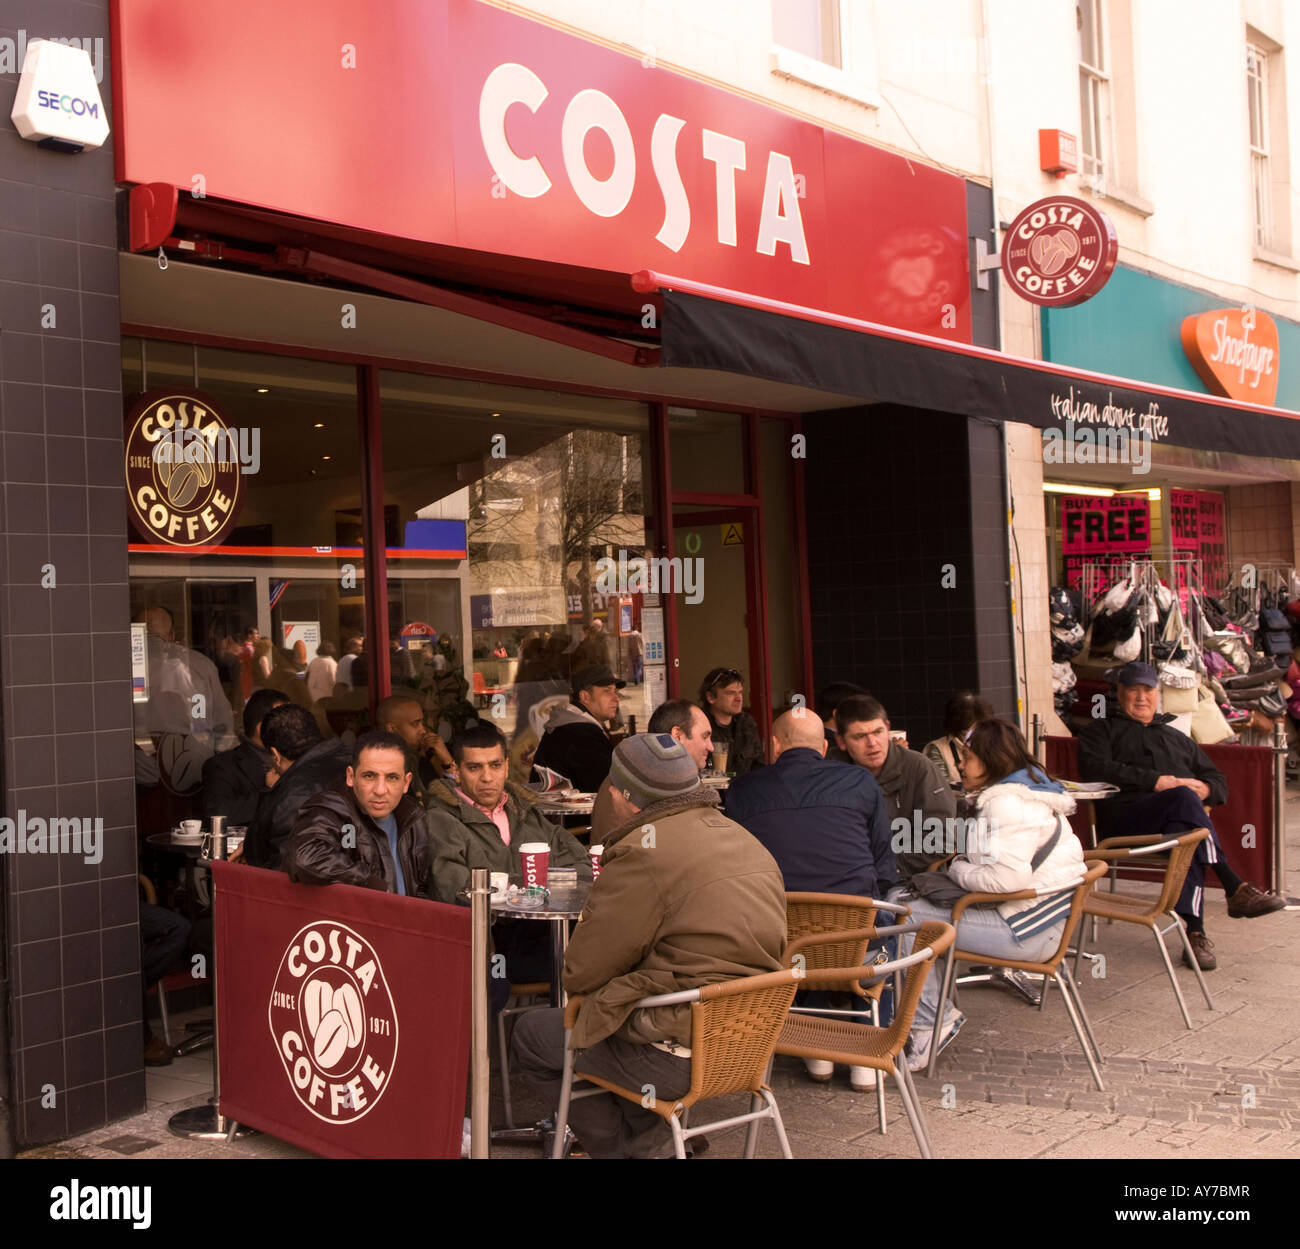 Costa Coffee, High Street, Hounslow, Middlesex, Reino Unido. Foto de stock